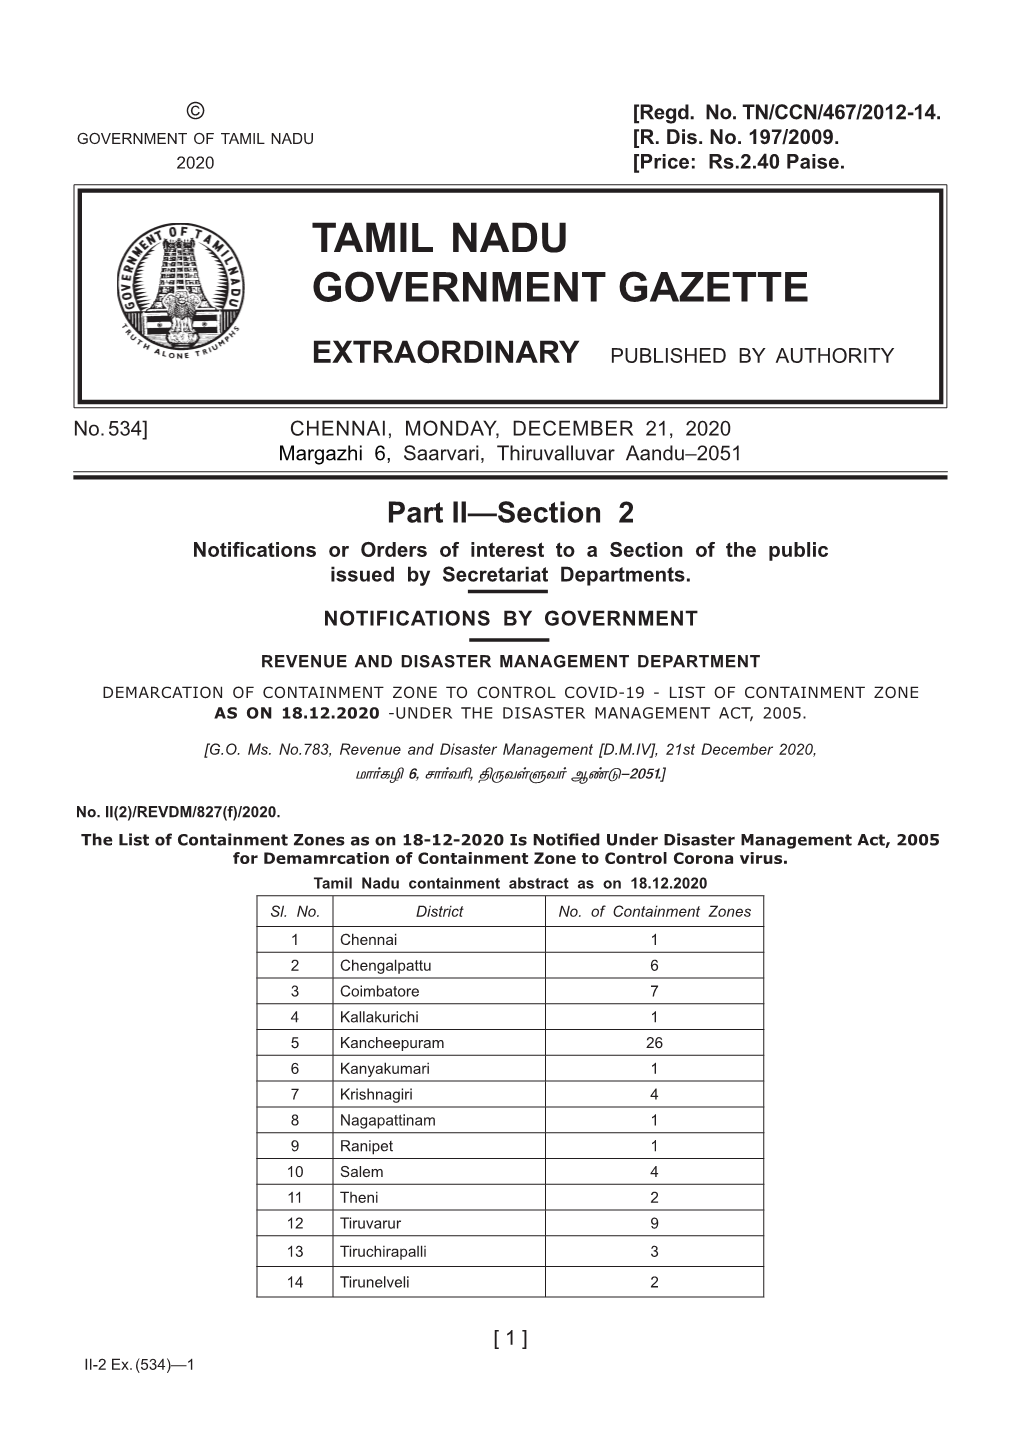 534] CHENNAI, MONDAY, DECEMBER 21, 2020 Margazhi 6, Saarvari, Thiruvalluvar Aandu–2051